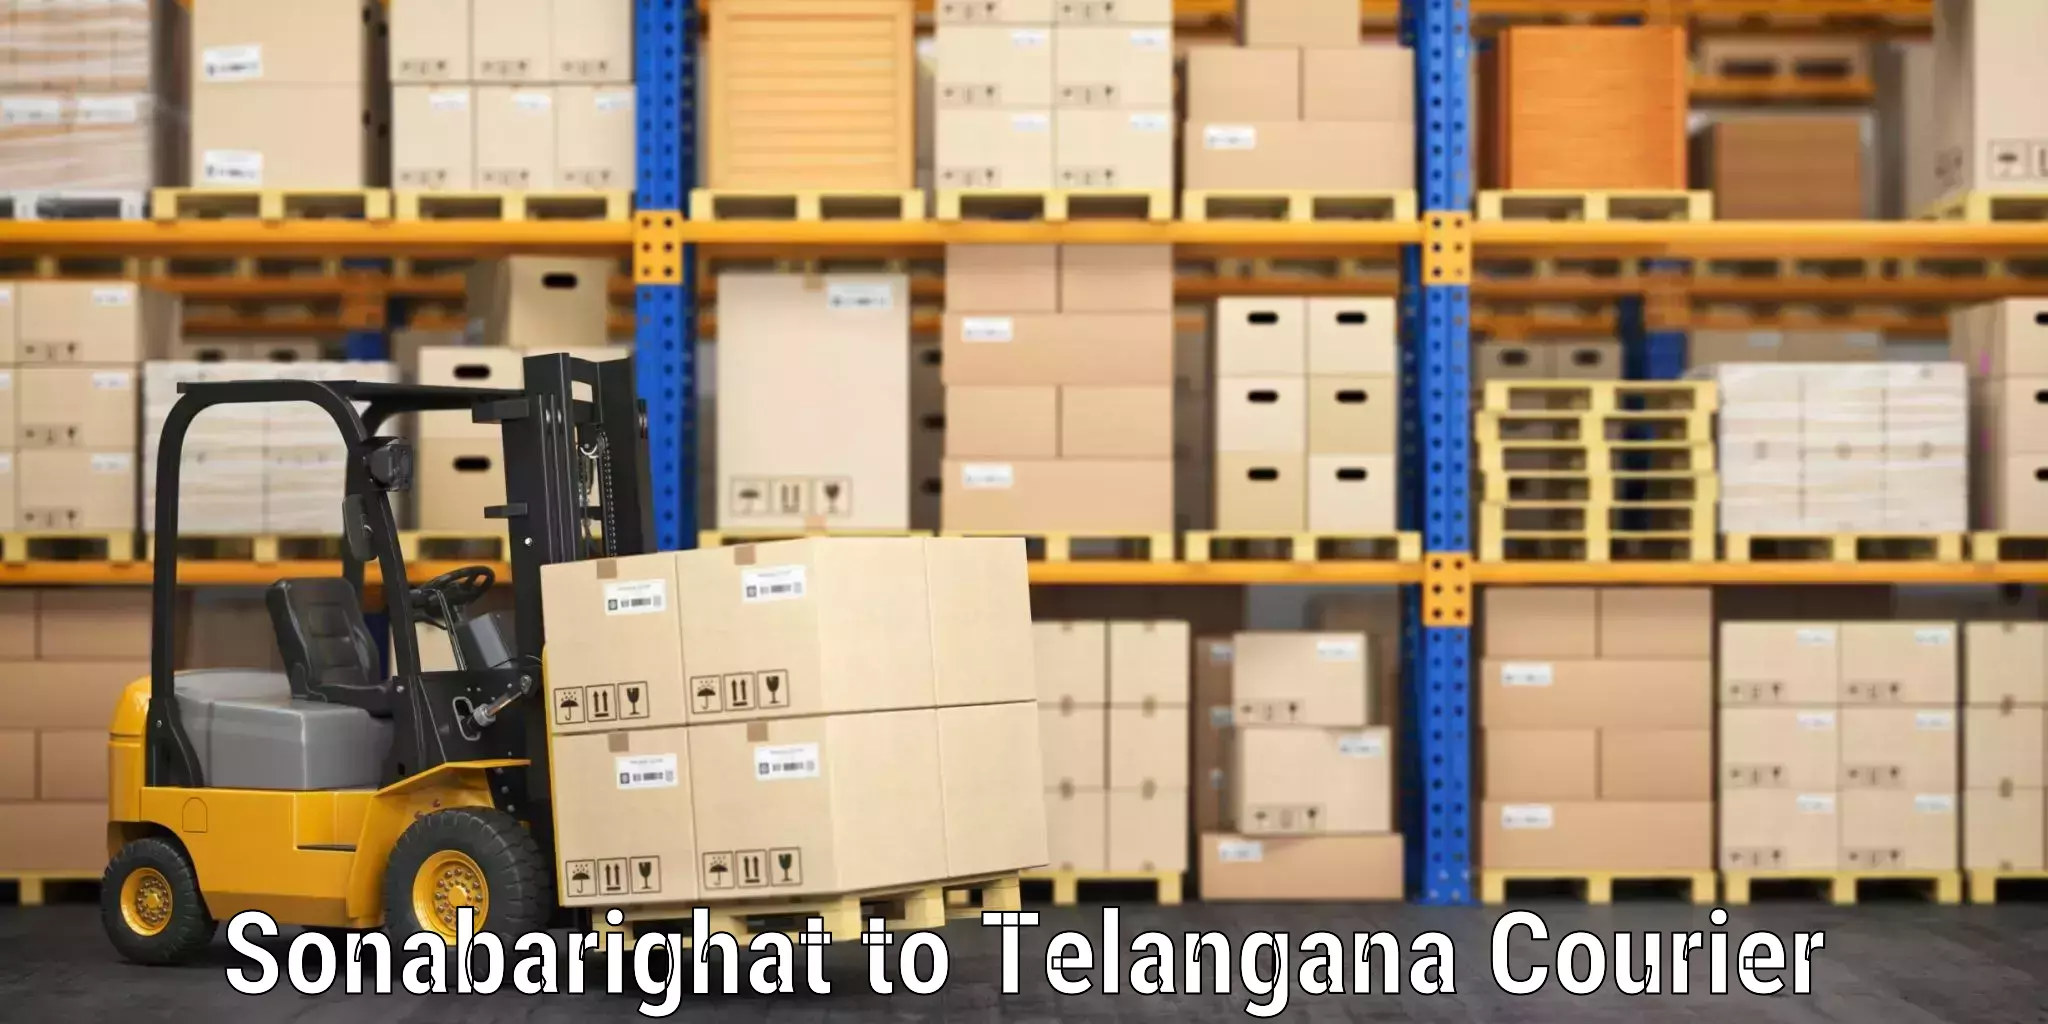 Baggage transport network Sonabarighat to Telangana